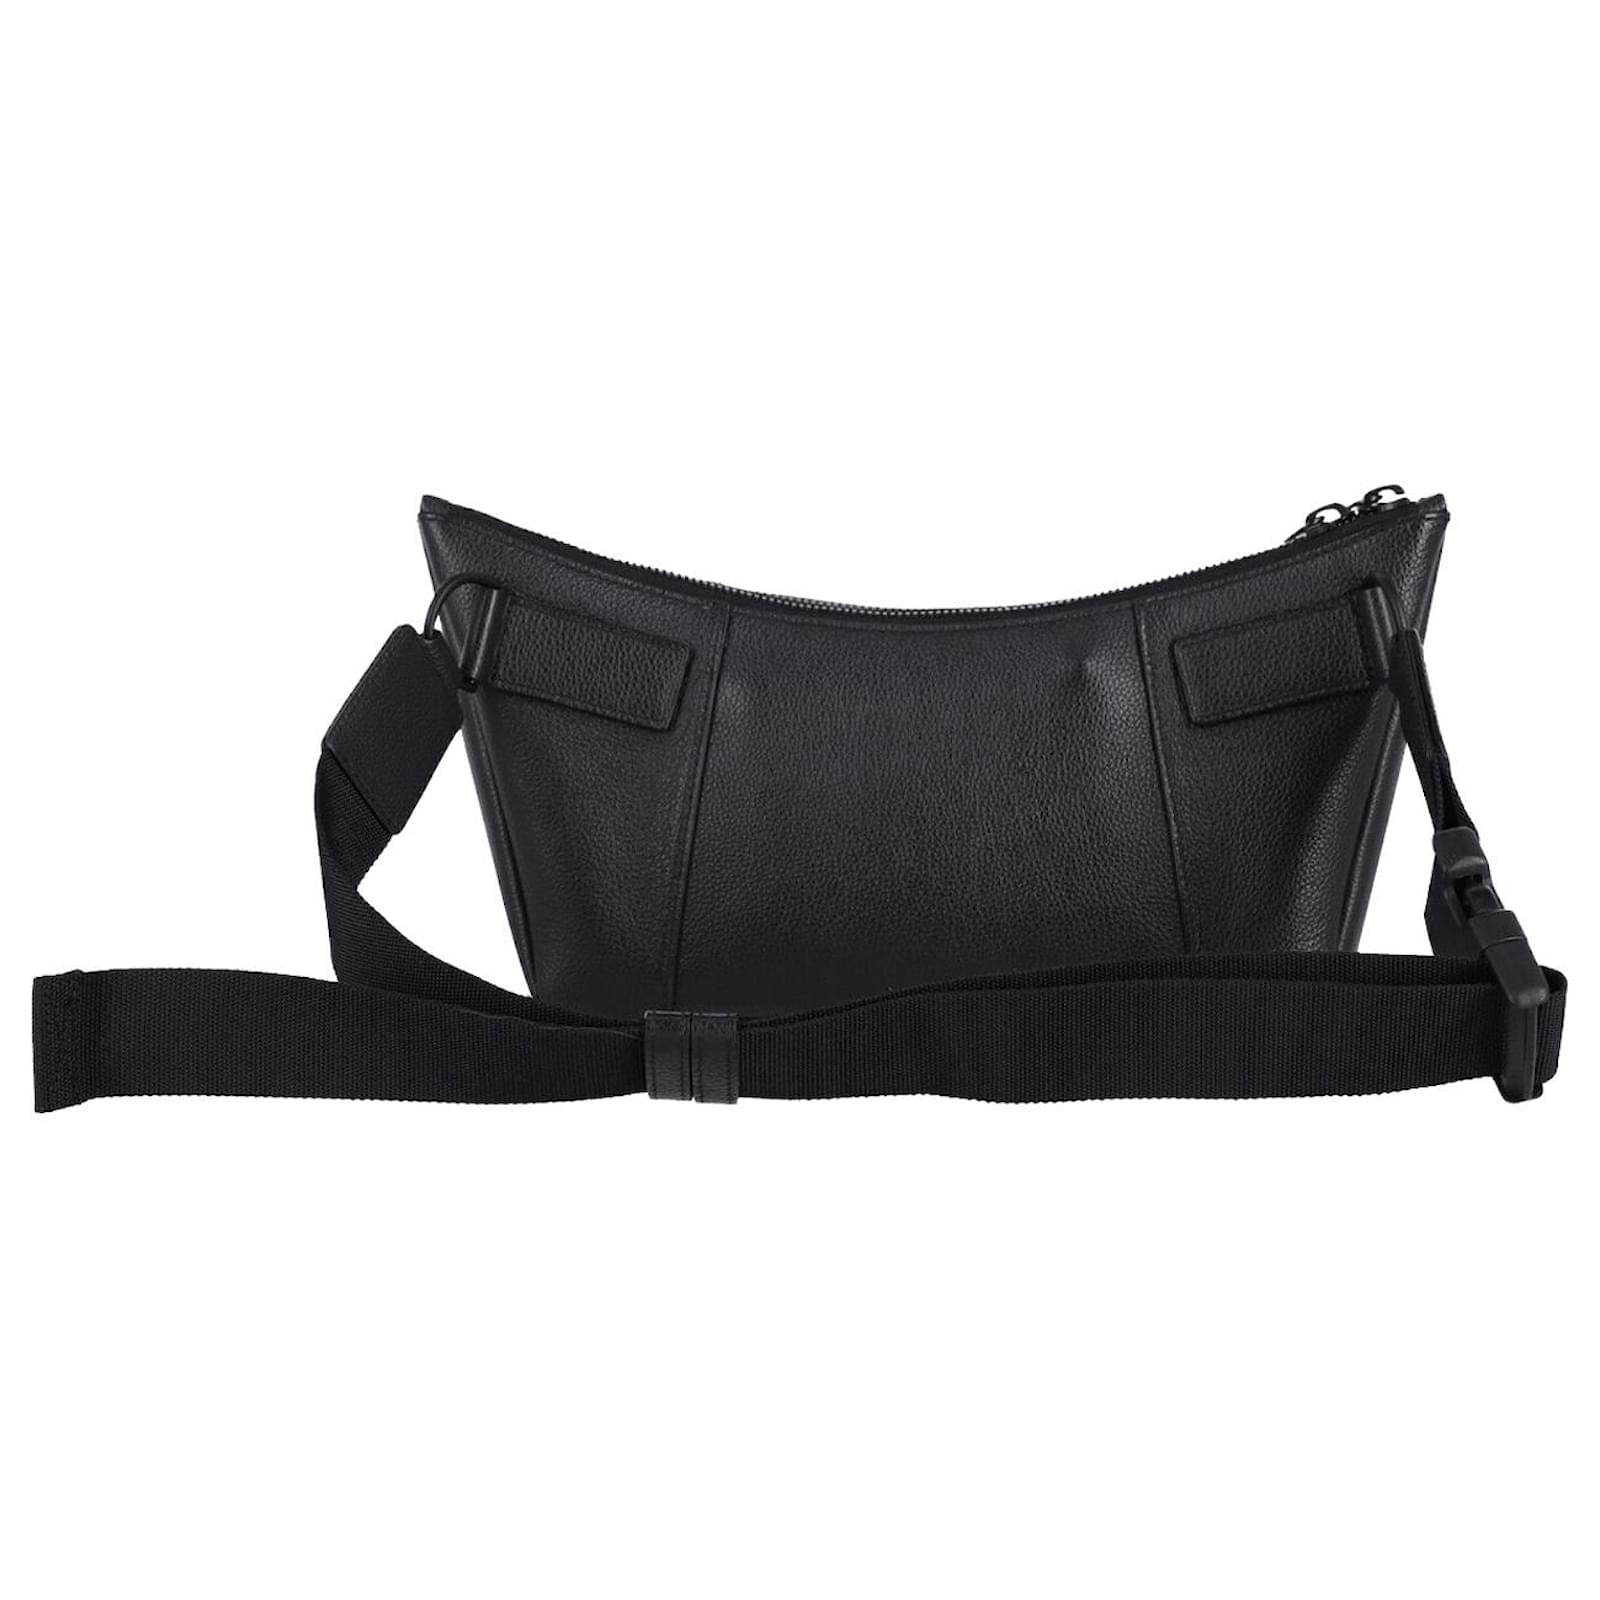 Women's Louis Vuitton Belt bags, waist bags and fanny packs from C$1,111